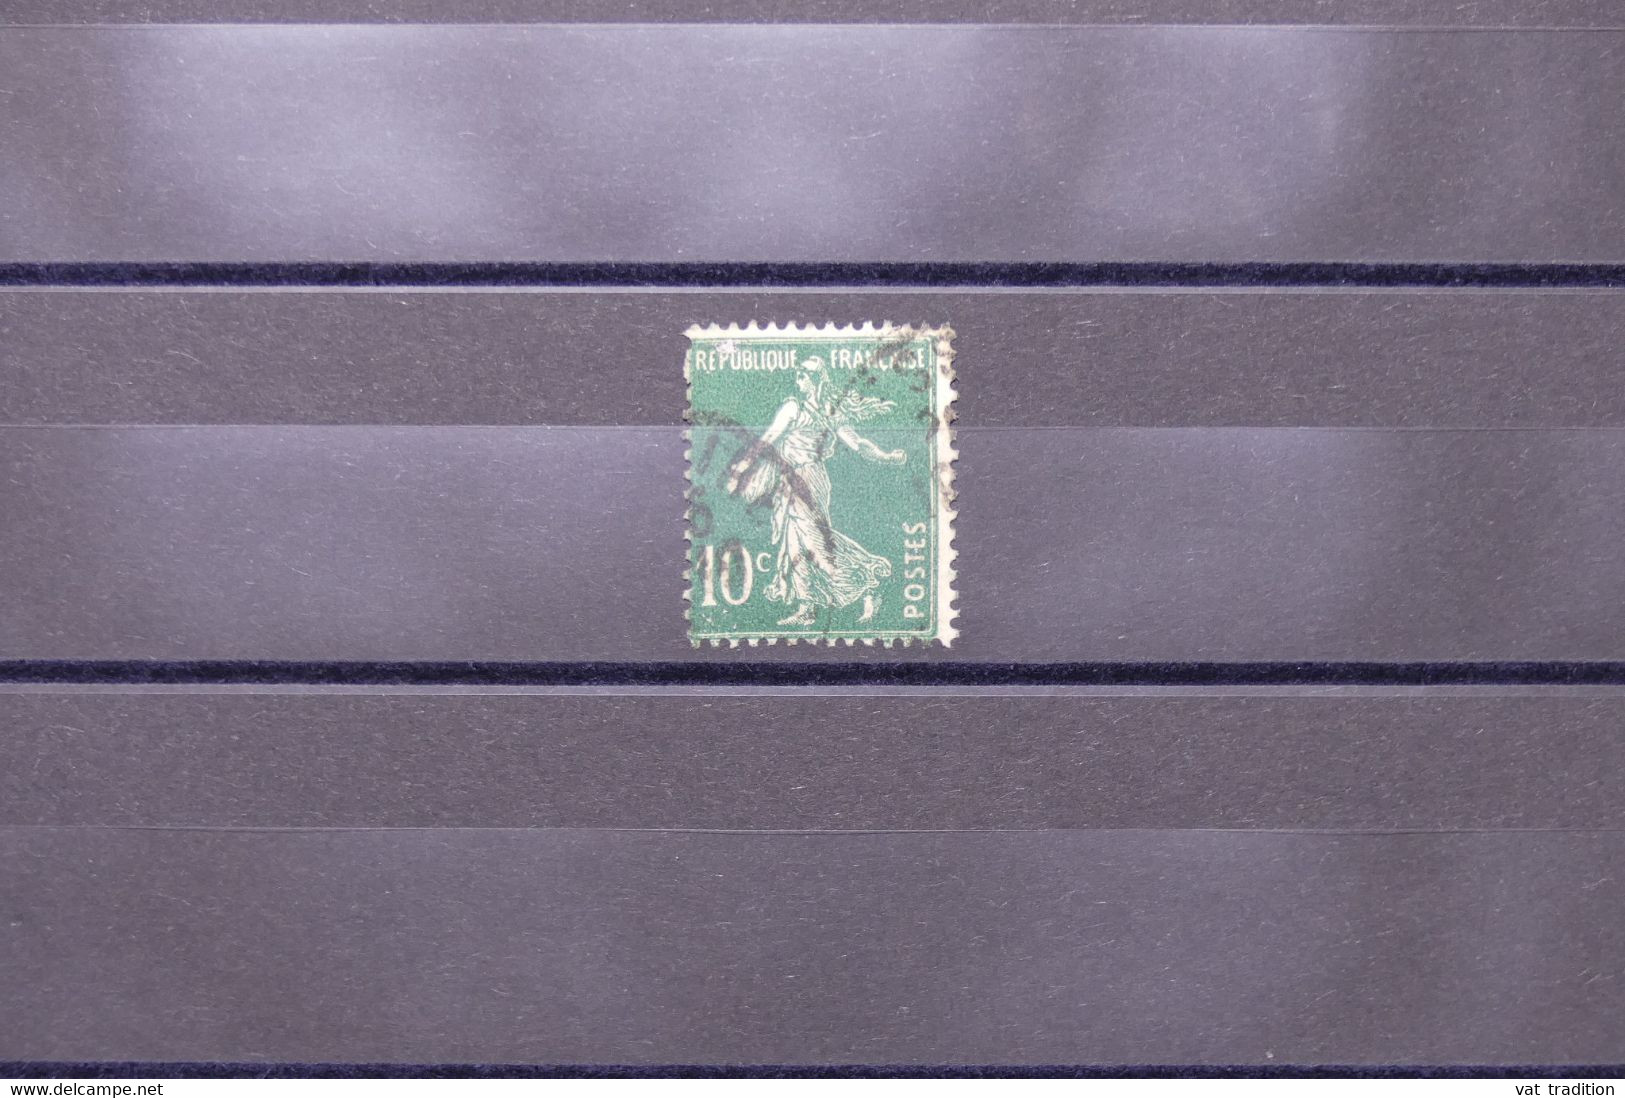 FRANCE - Variété - N°Yvert 159 - Semeuse - Lettre E De Postes En Trident - Oblitéré  - L 73977 - Gebruikt